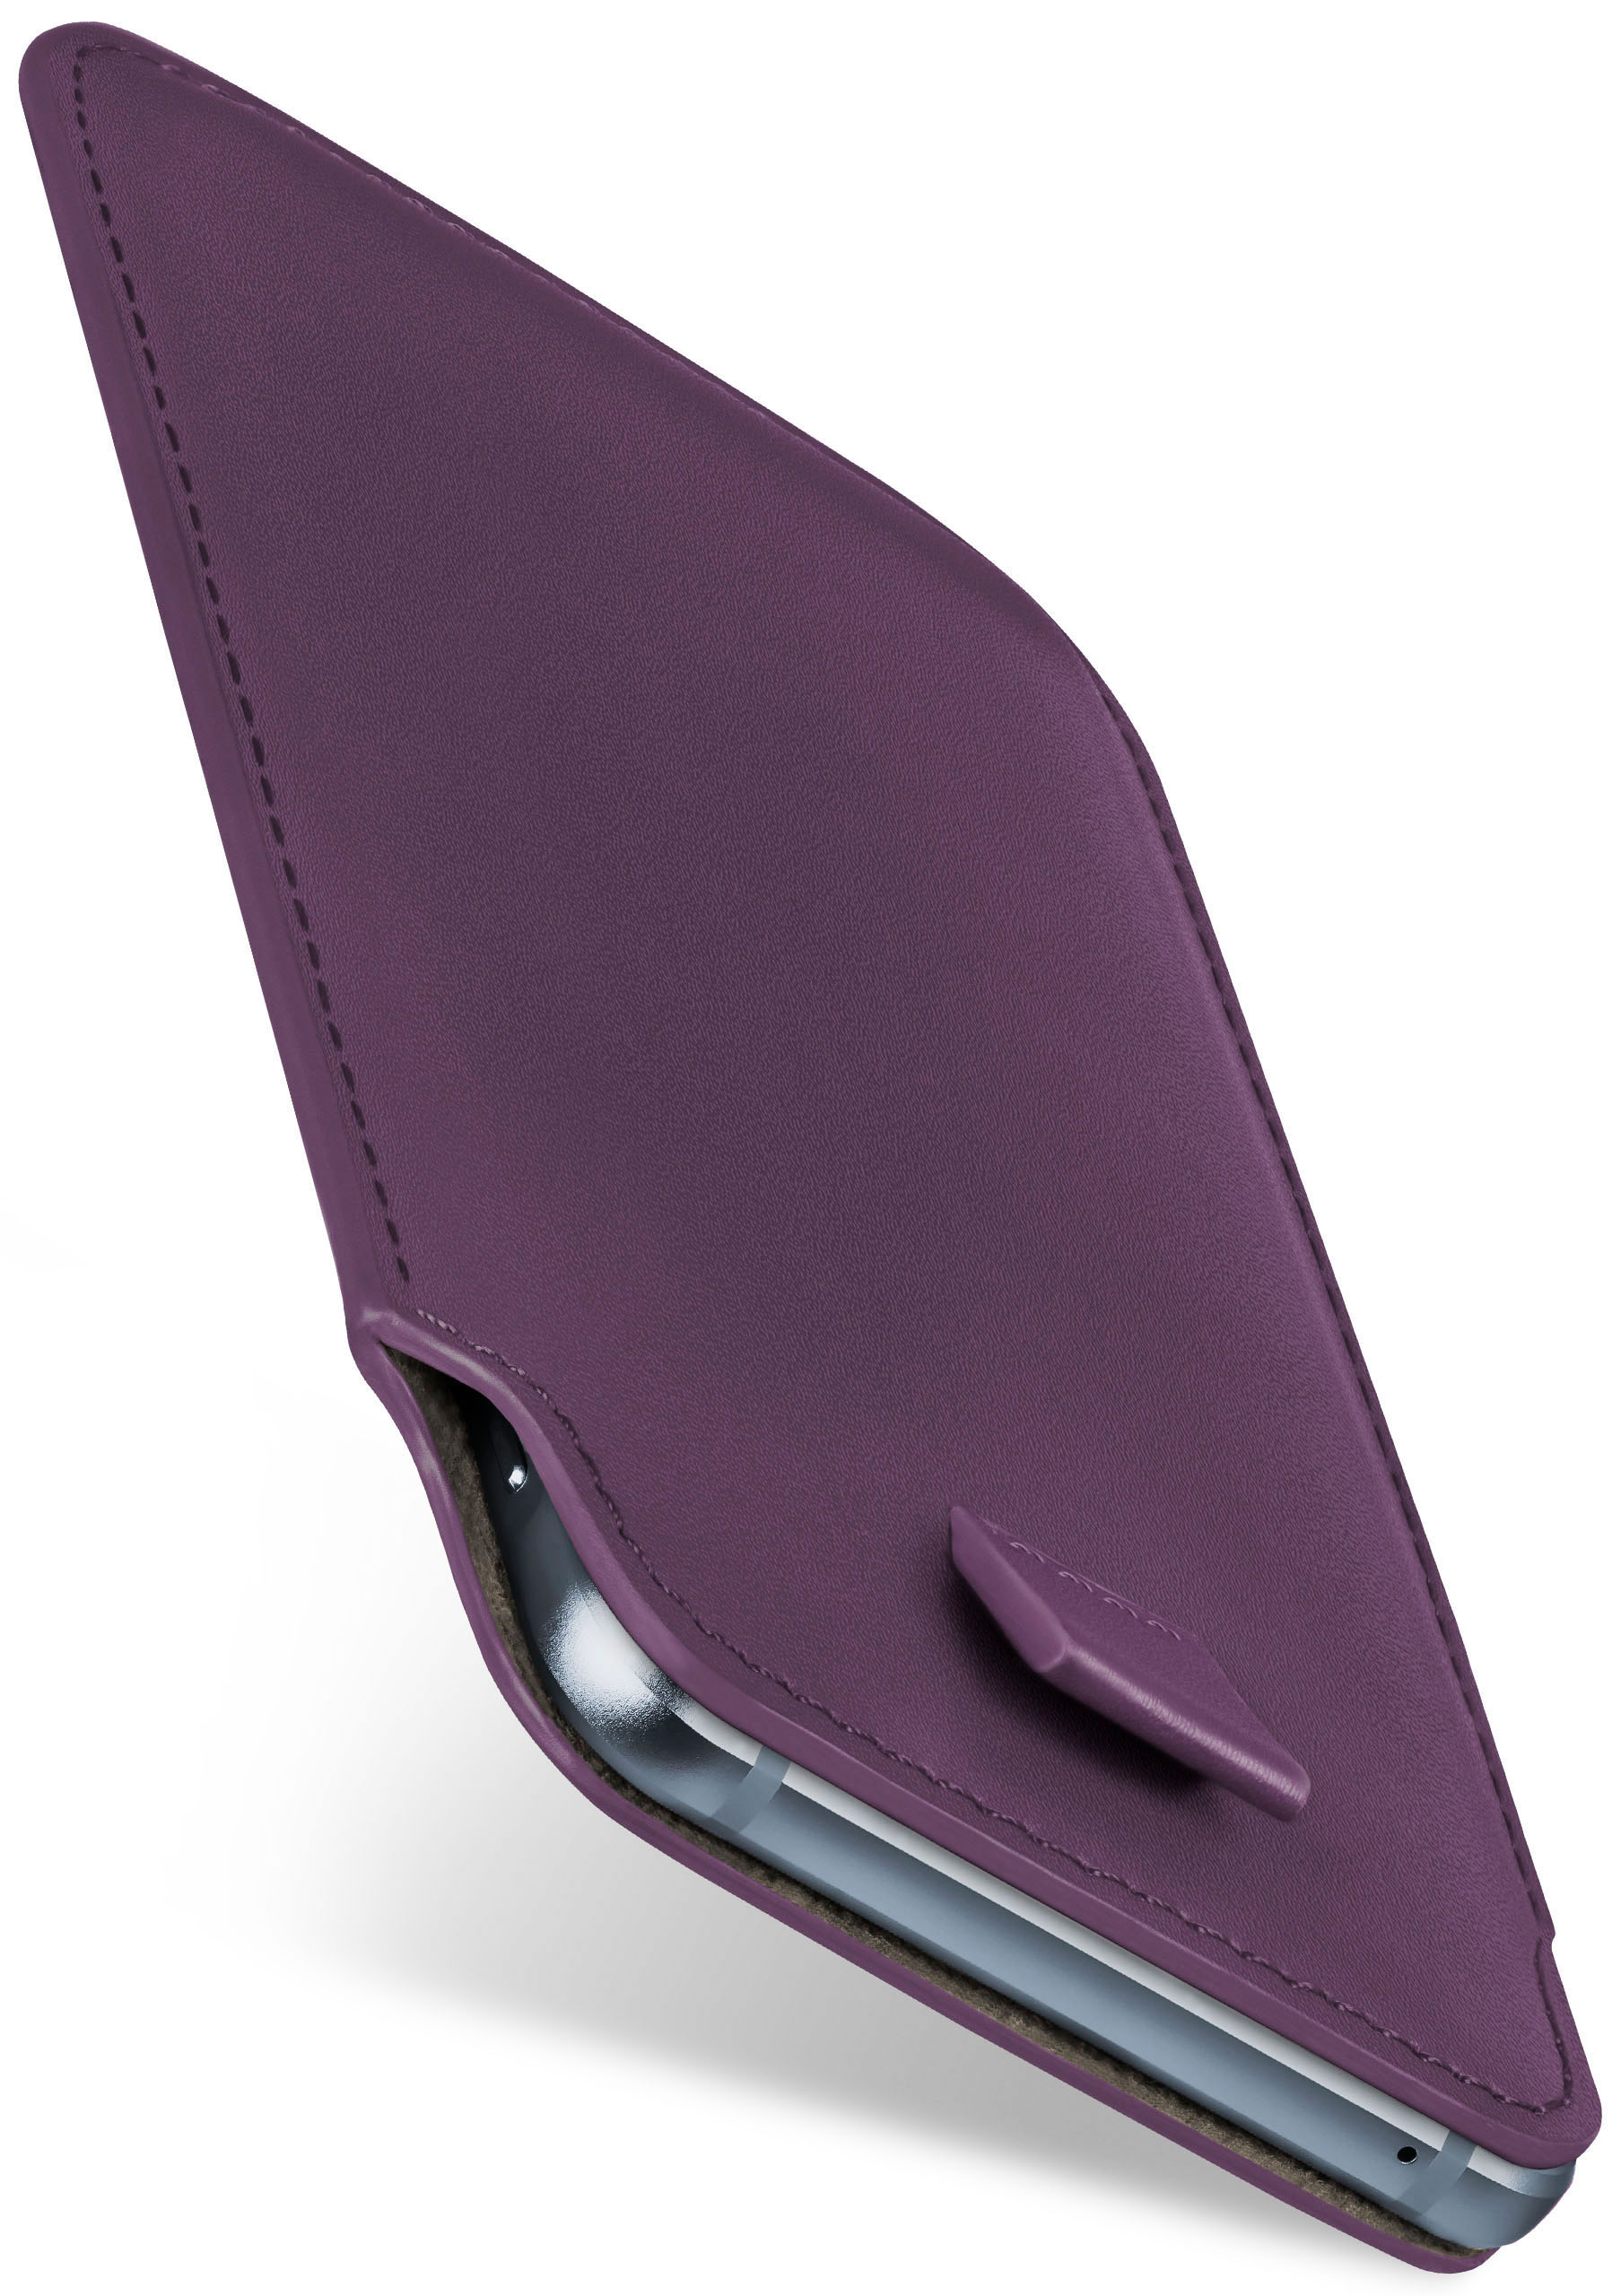 Emporia, Eco, MOEX Slide Case, Indigo-Violet Cover, Full